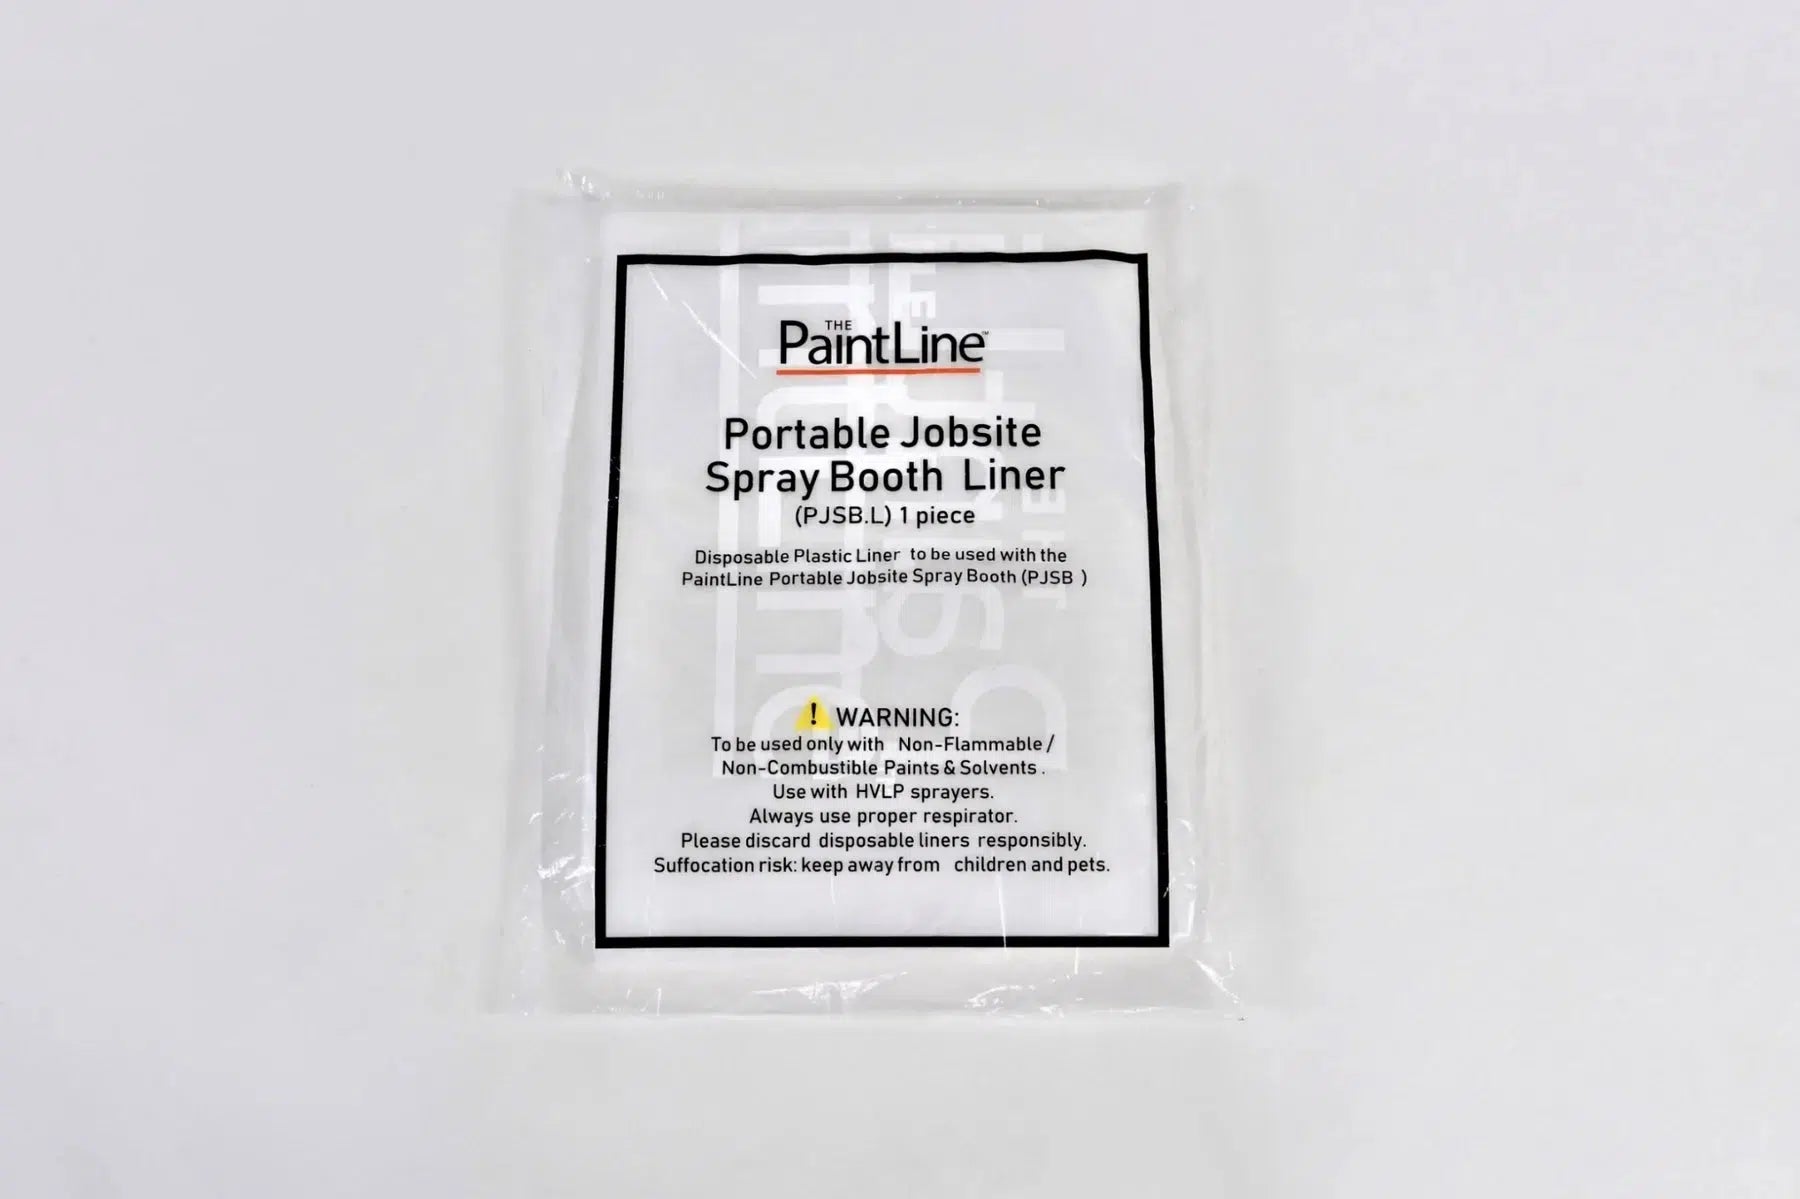 PaintLine PJSB Portable Jobsite Spray Booth